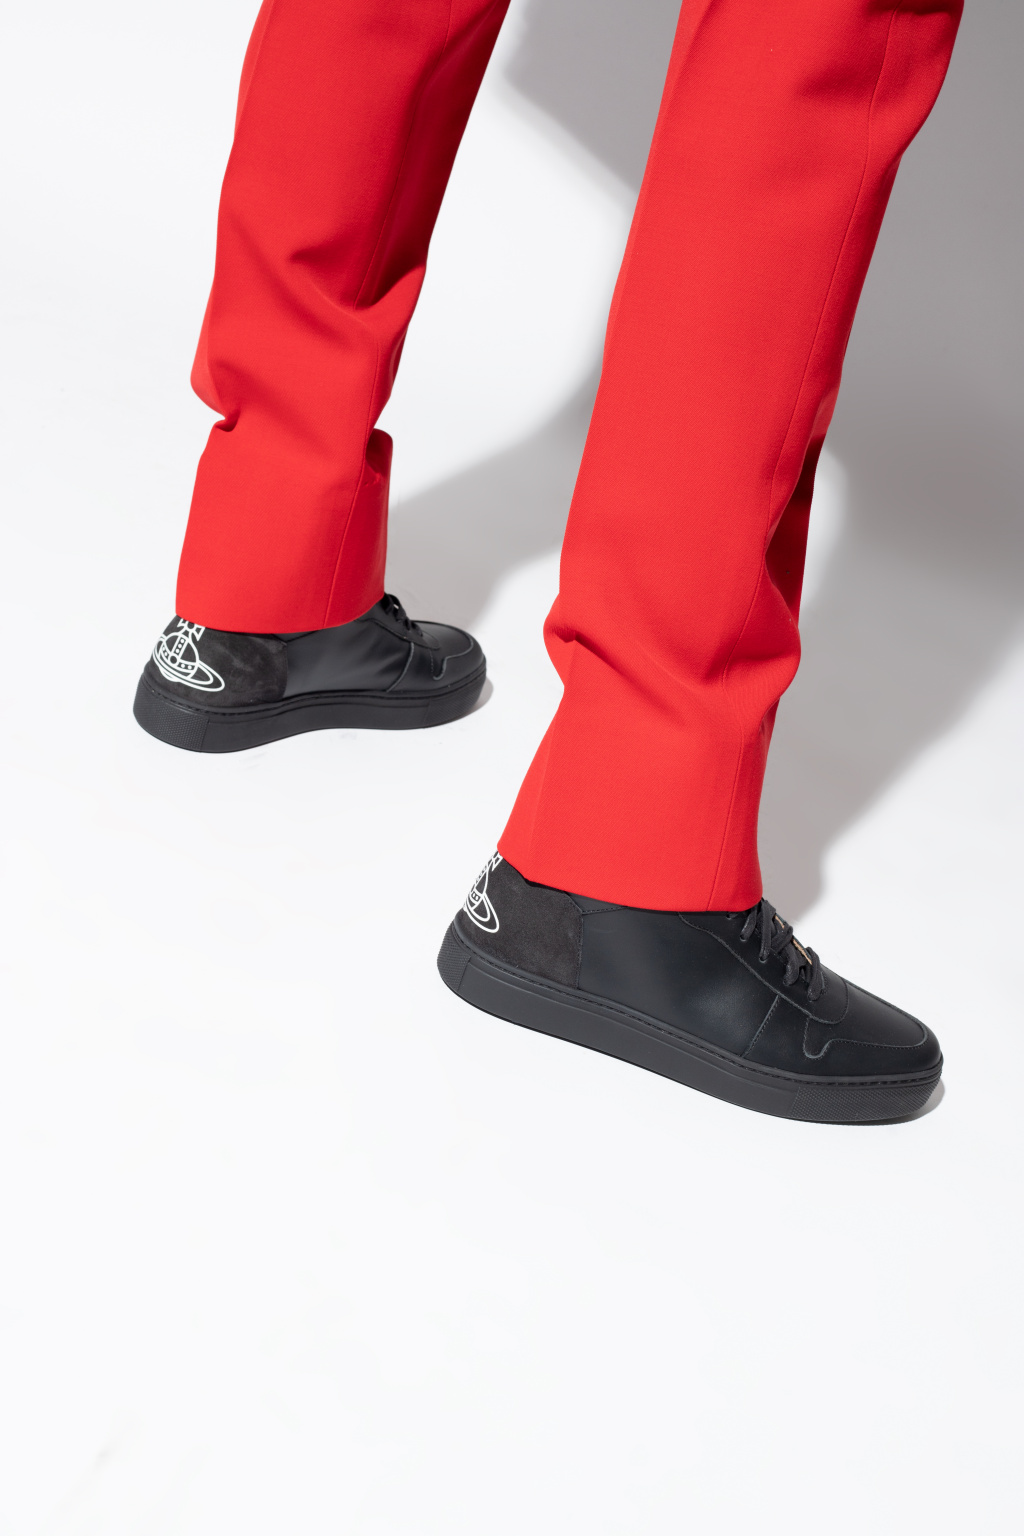 Vivienne Westwood Reebok Floatride Energy Daily sneakers in black and white